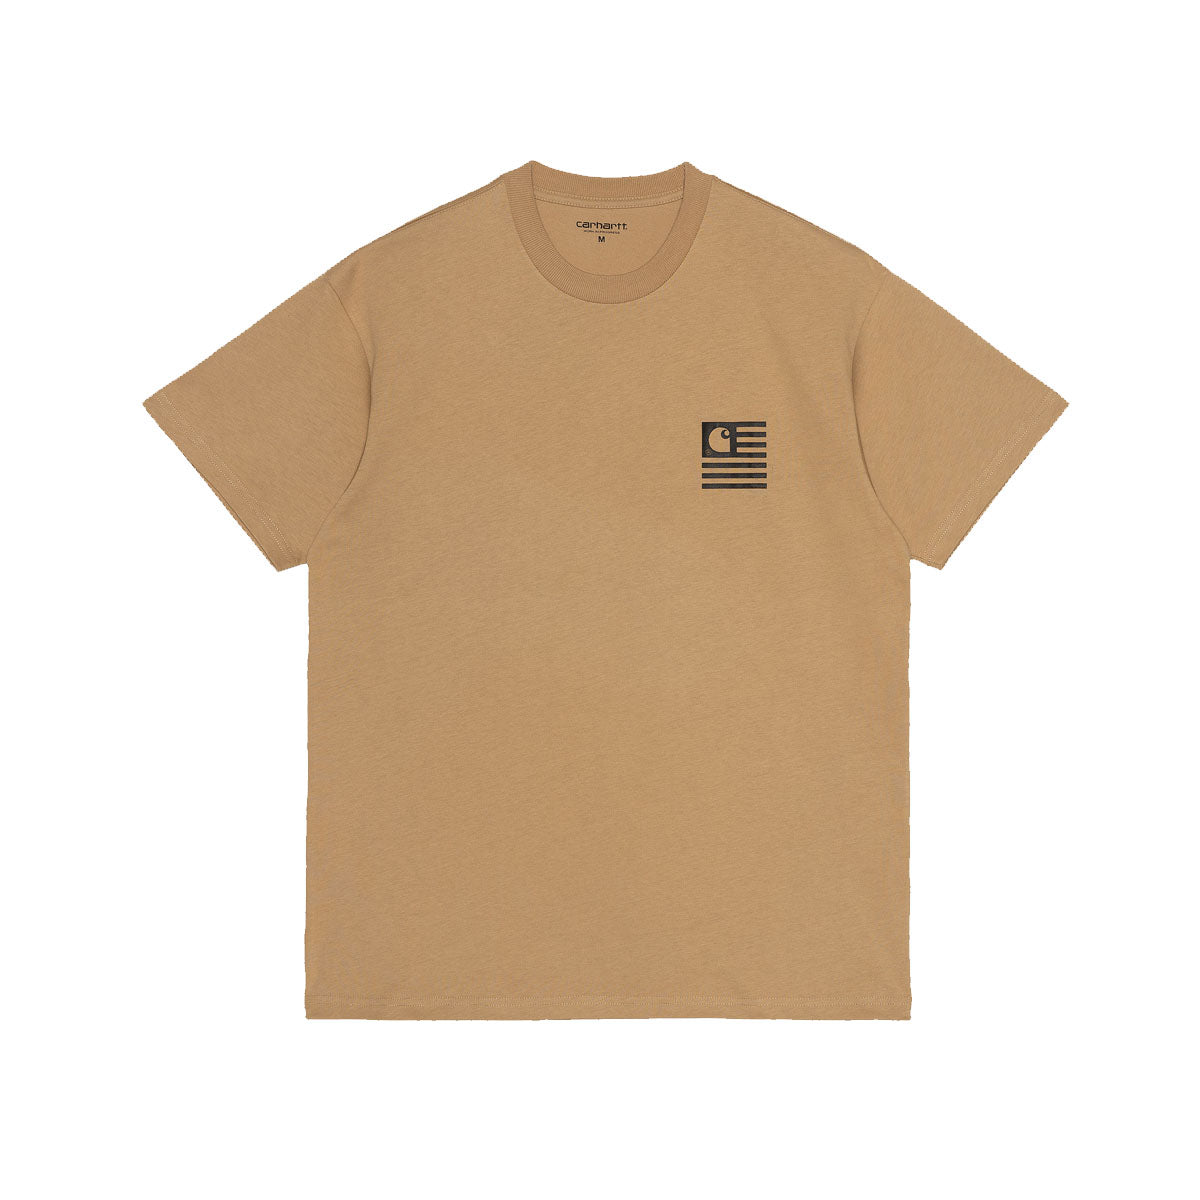 Carhartt WIP S/S Fade State T-Shirt Dusty Hamilton Brown Black